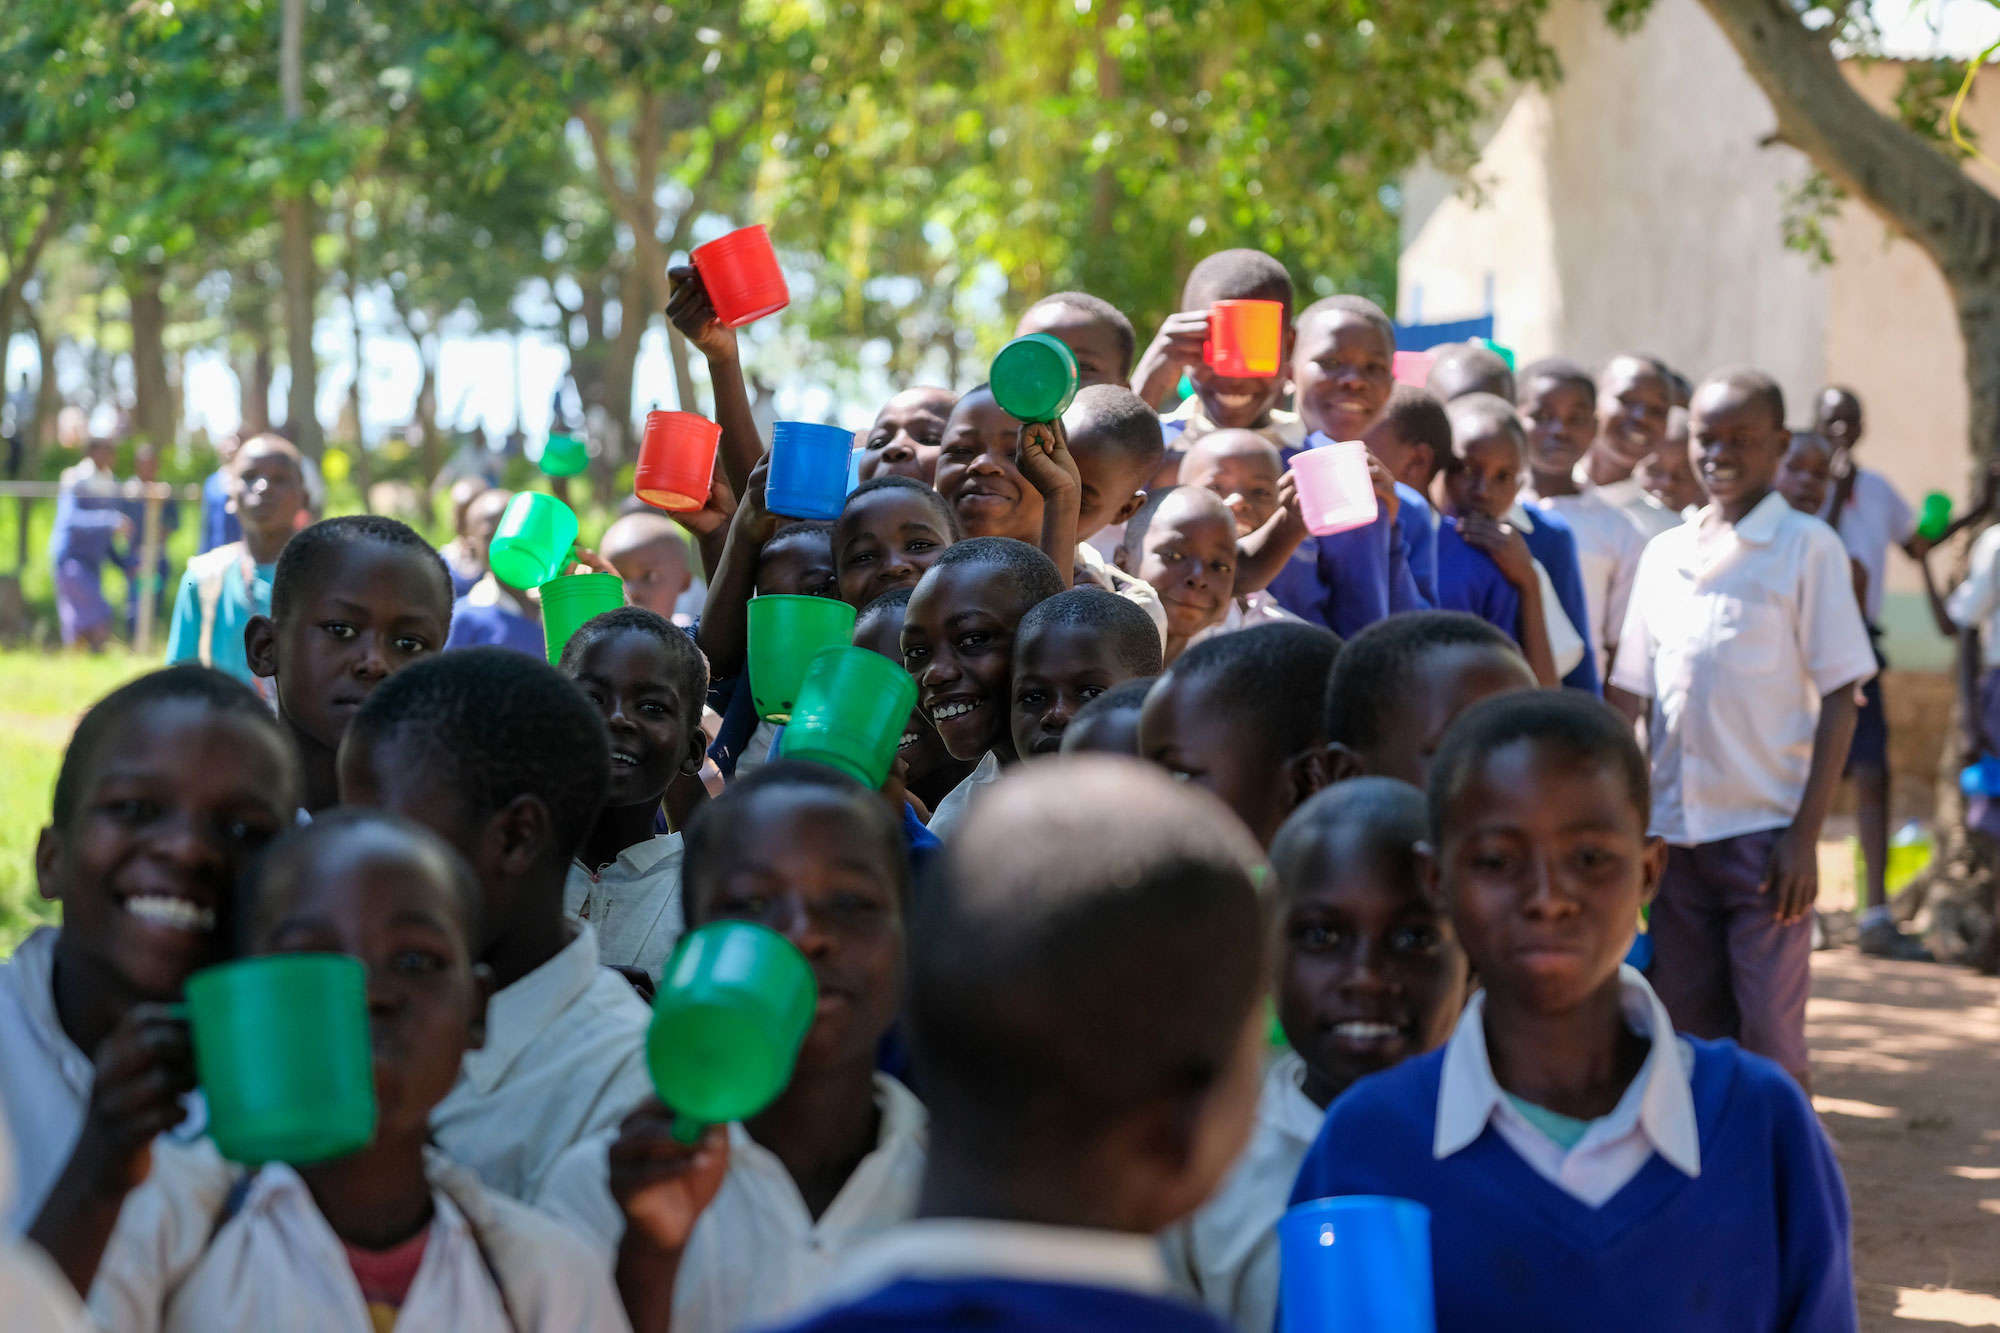 Dozens of Tanzanian school children line up with cups for porridge